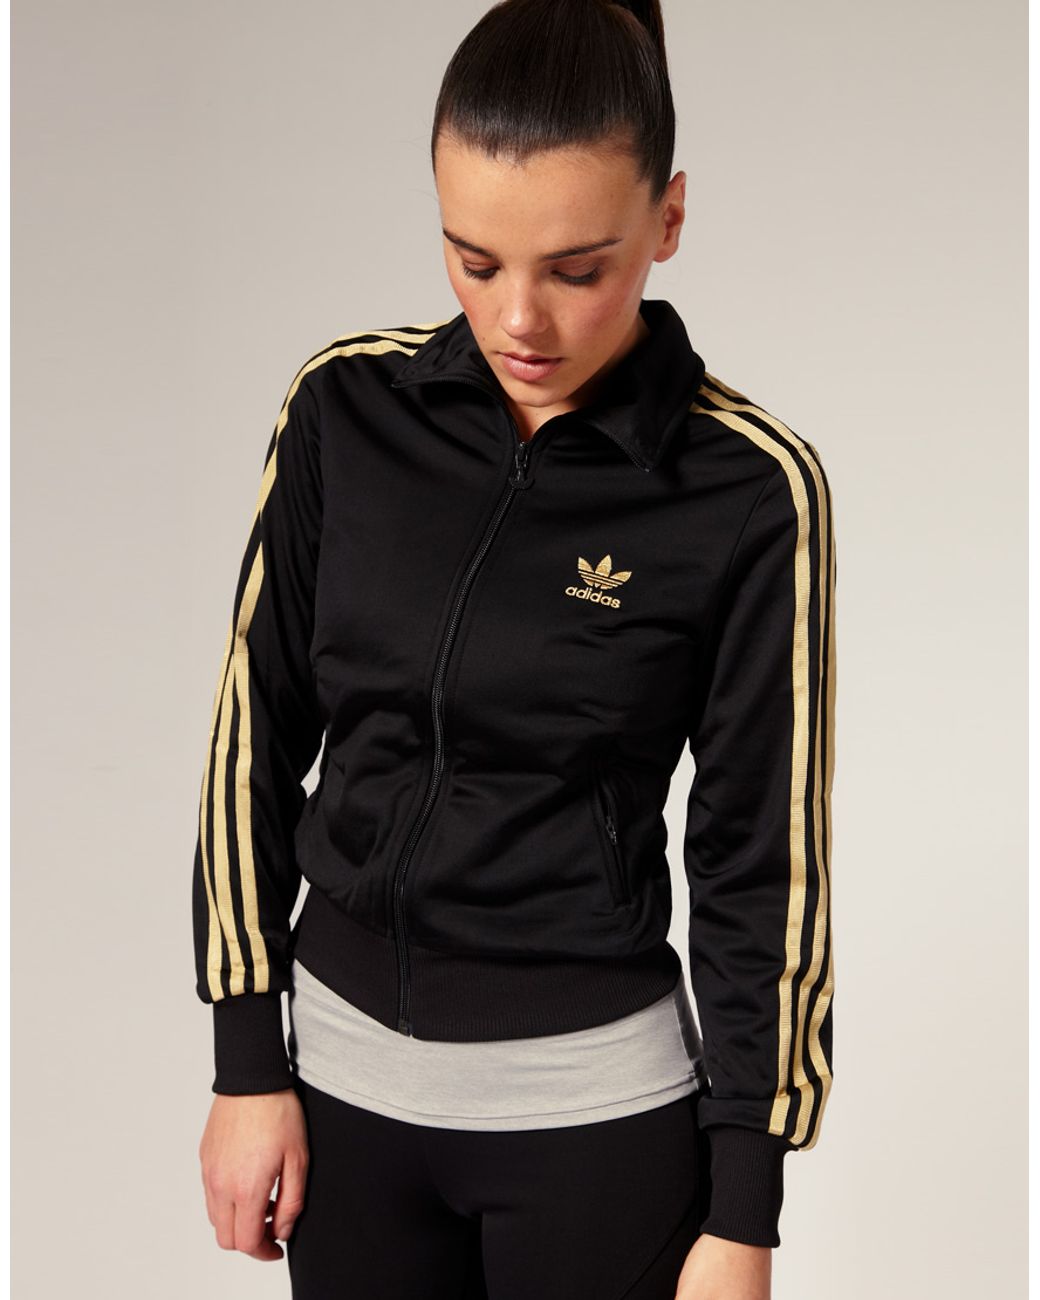 adidas Gold Stripe Classic Track Jacket in Black | Lyst